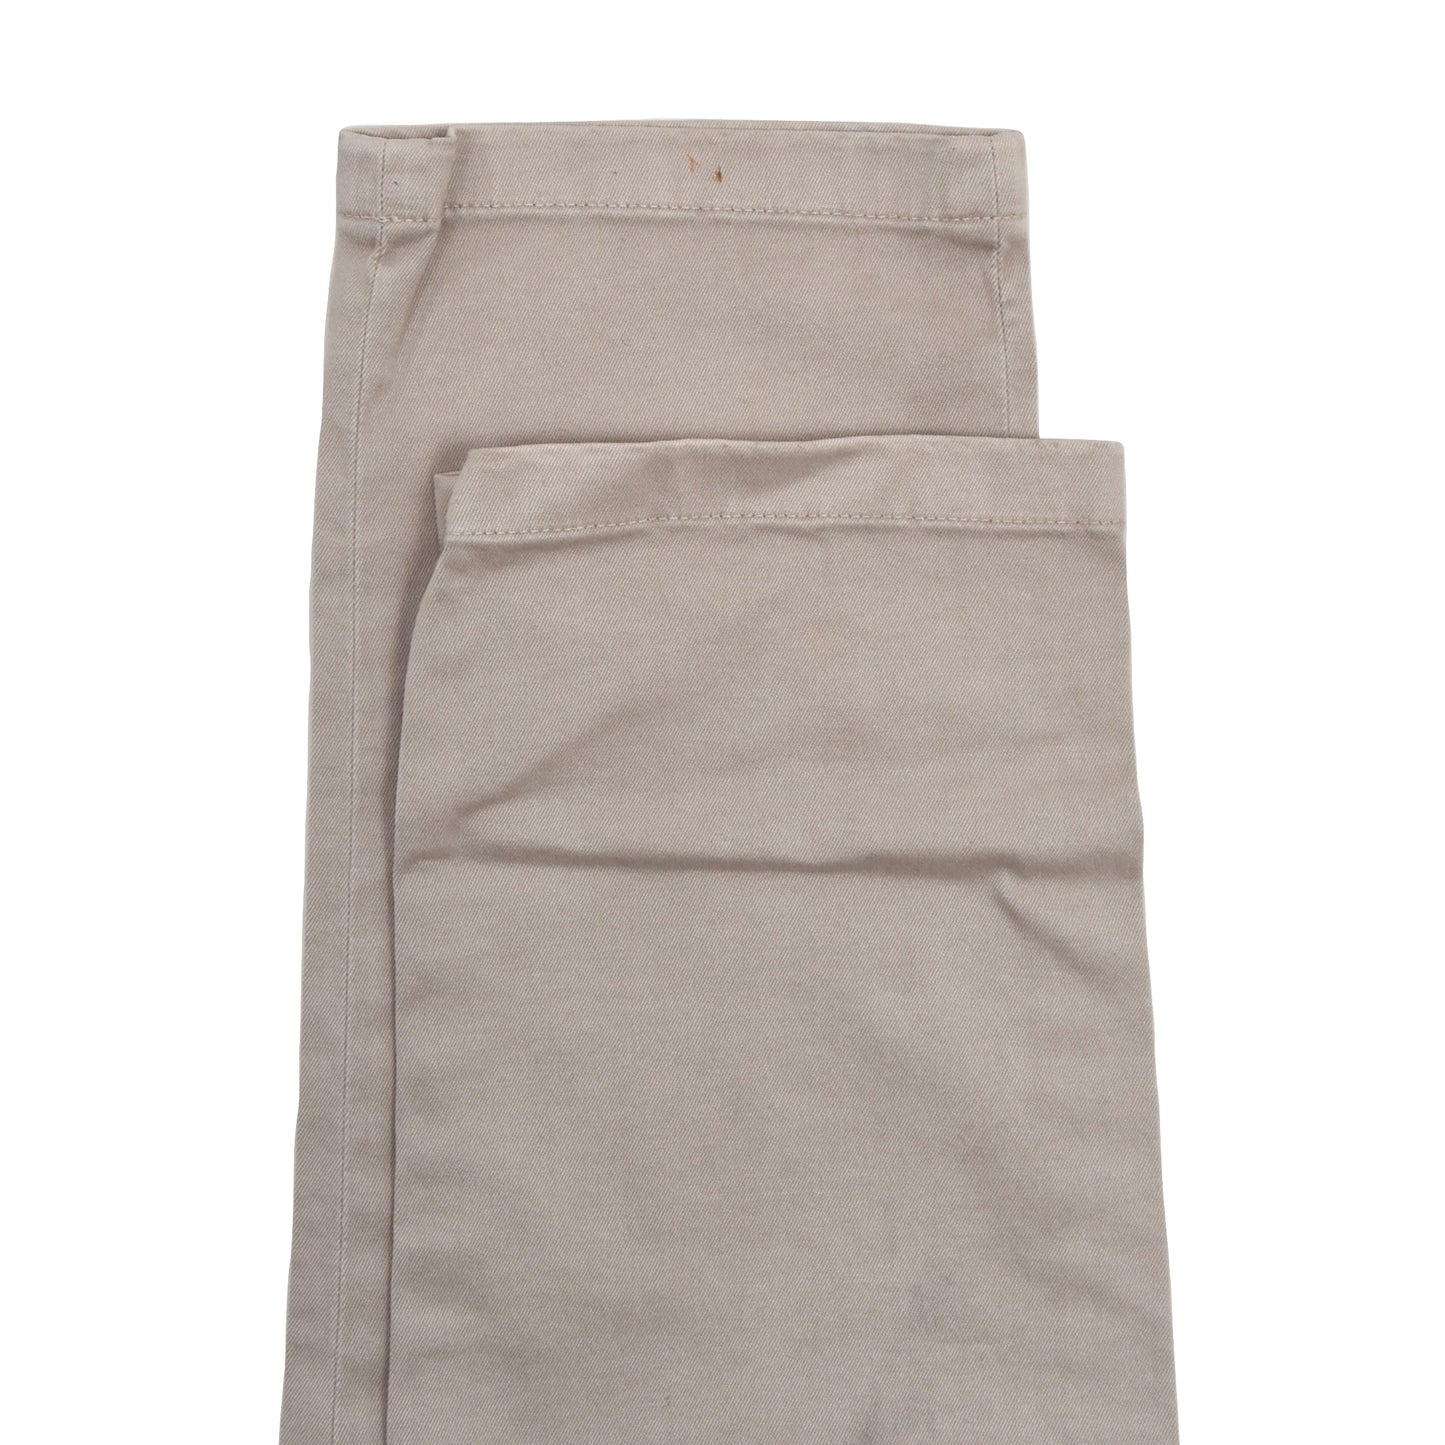 NWD Fay Slim Chino Pants Size 50 - Sand